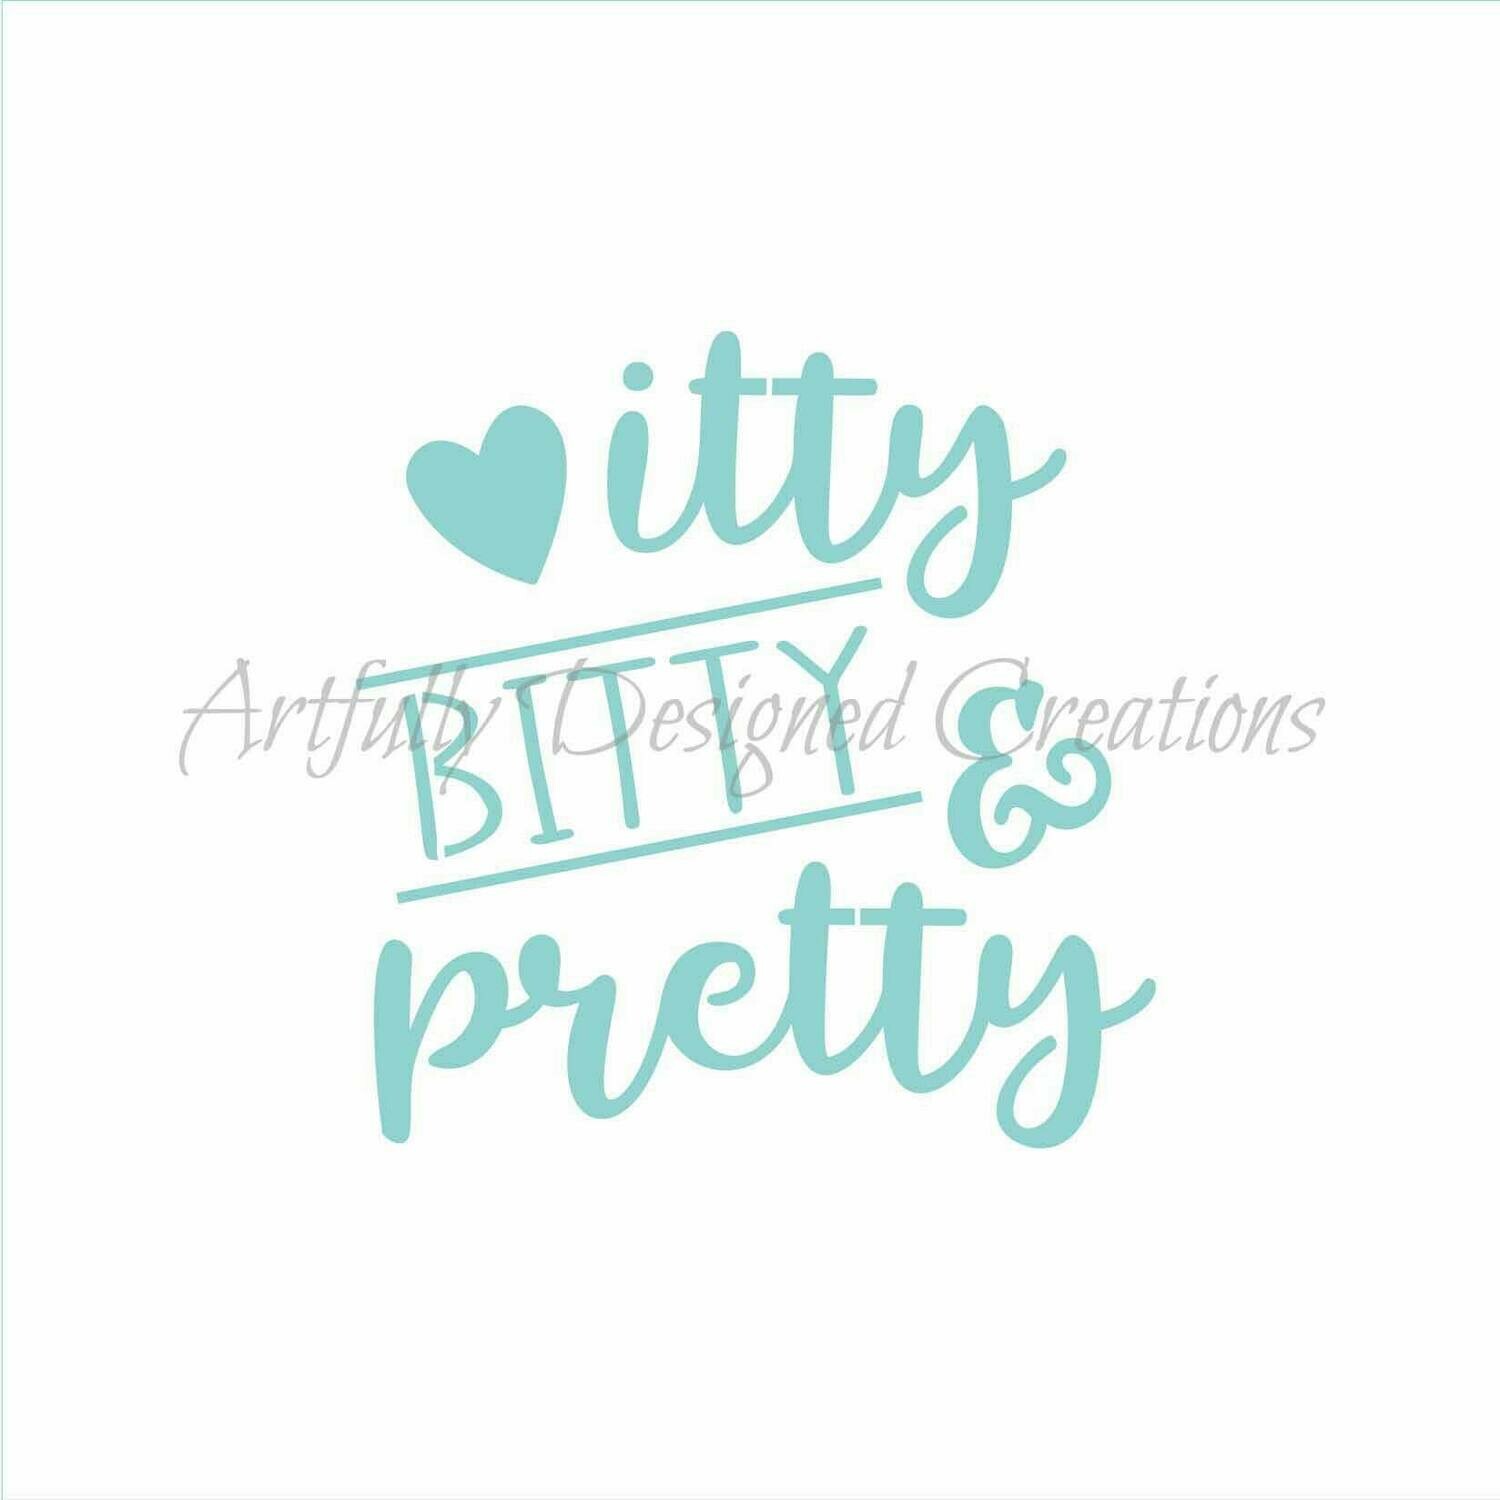 AD Itty Bitty and Pretty